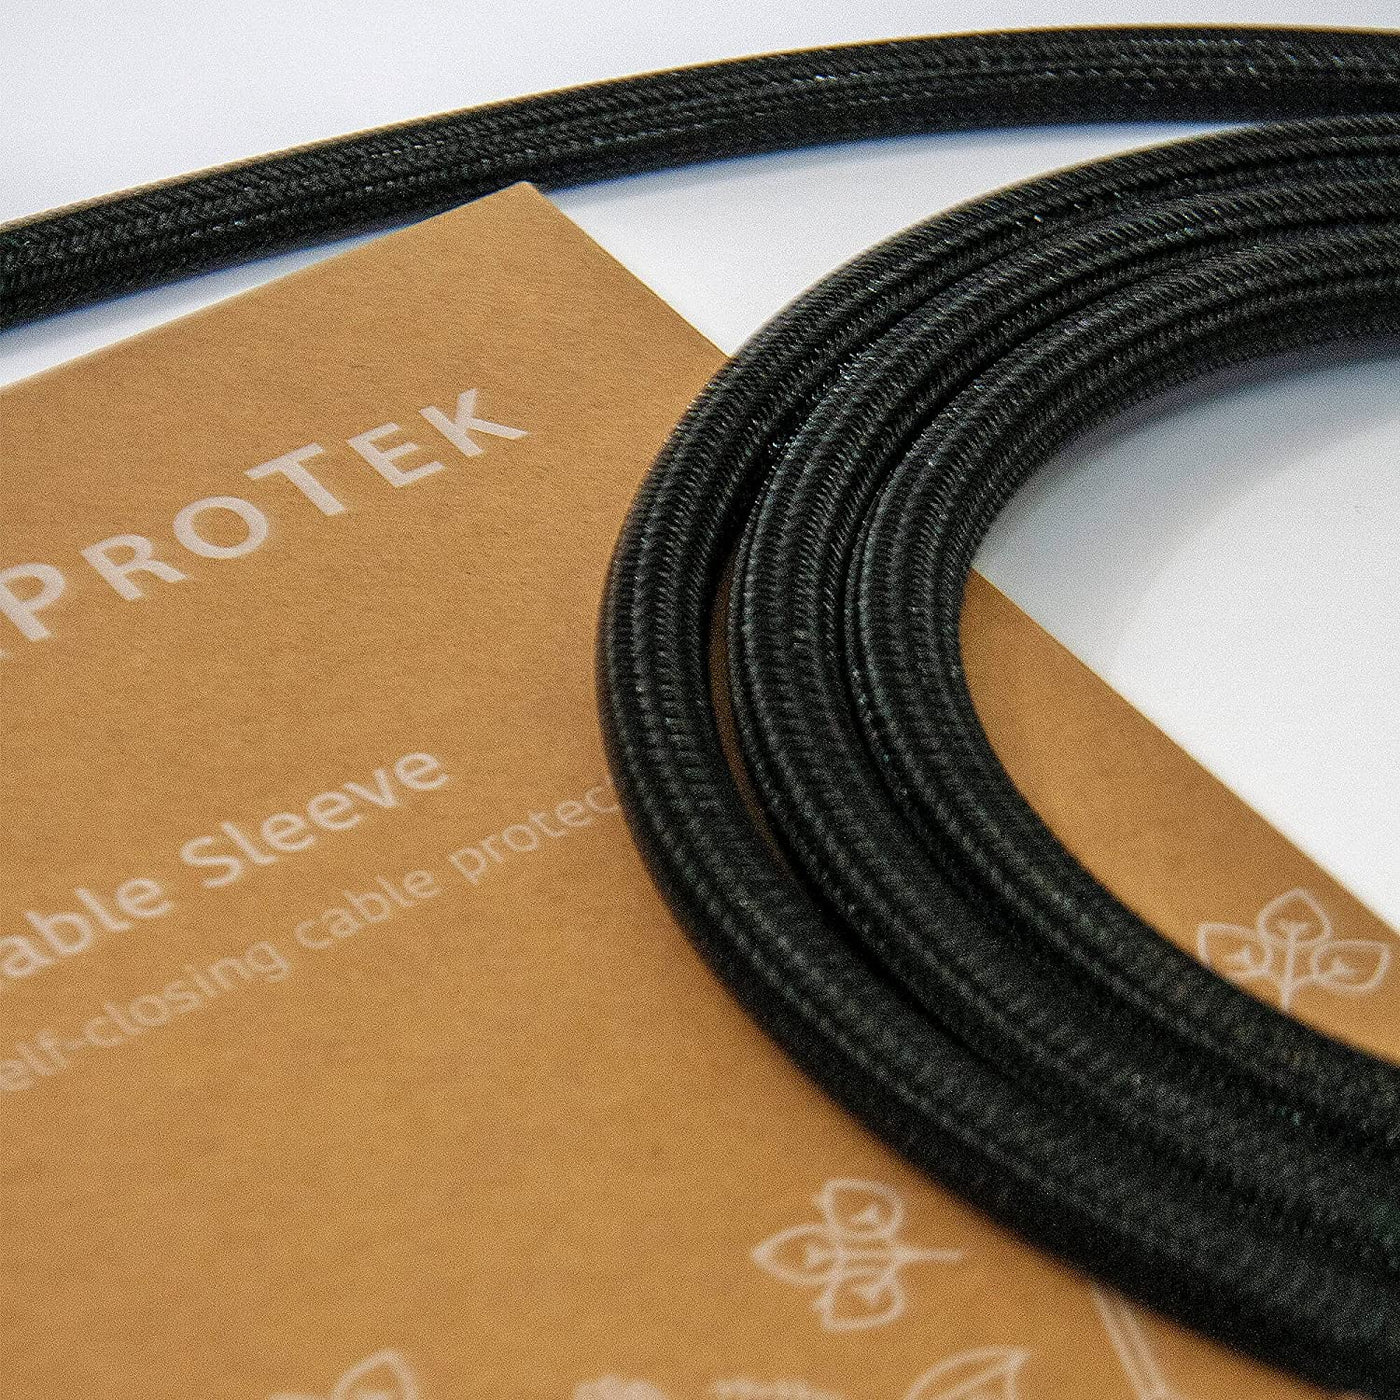 HomeProtek Self-locking cable sheath